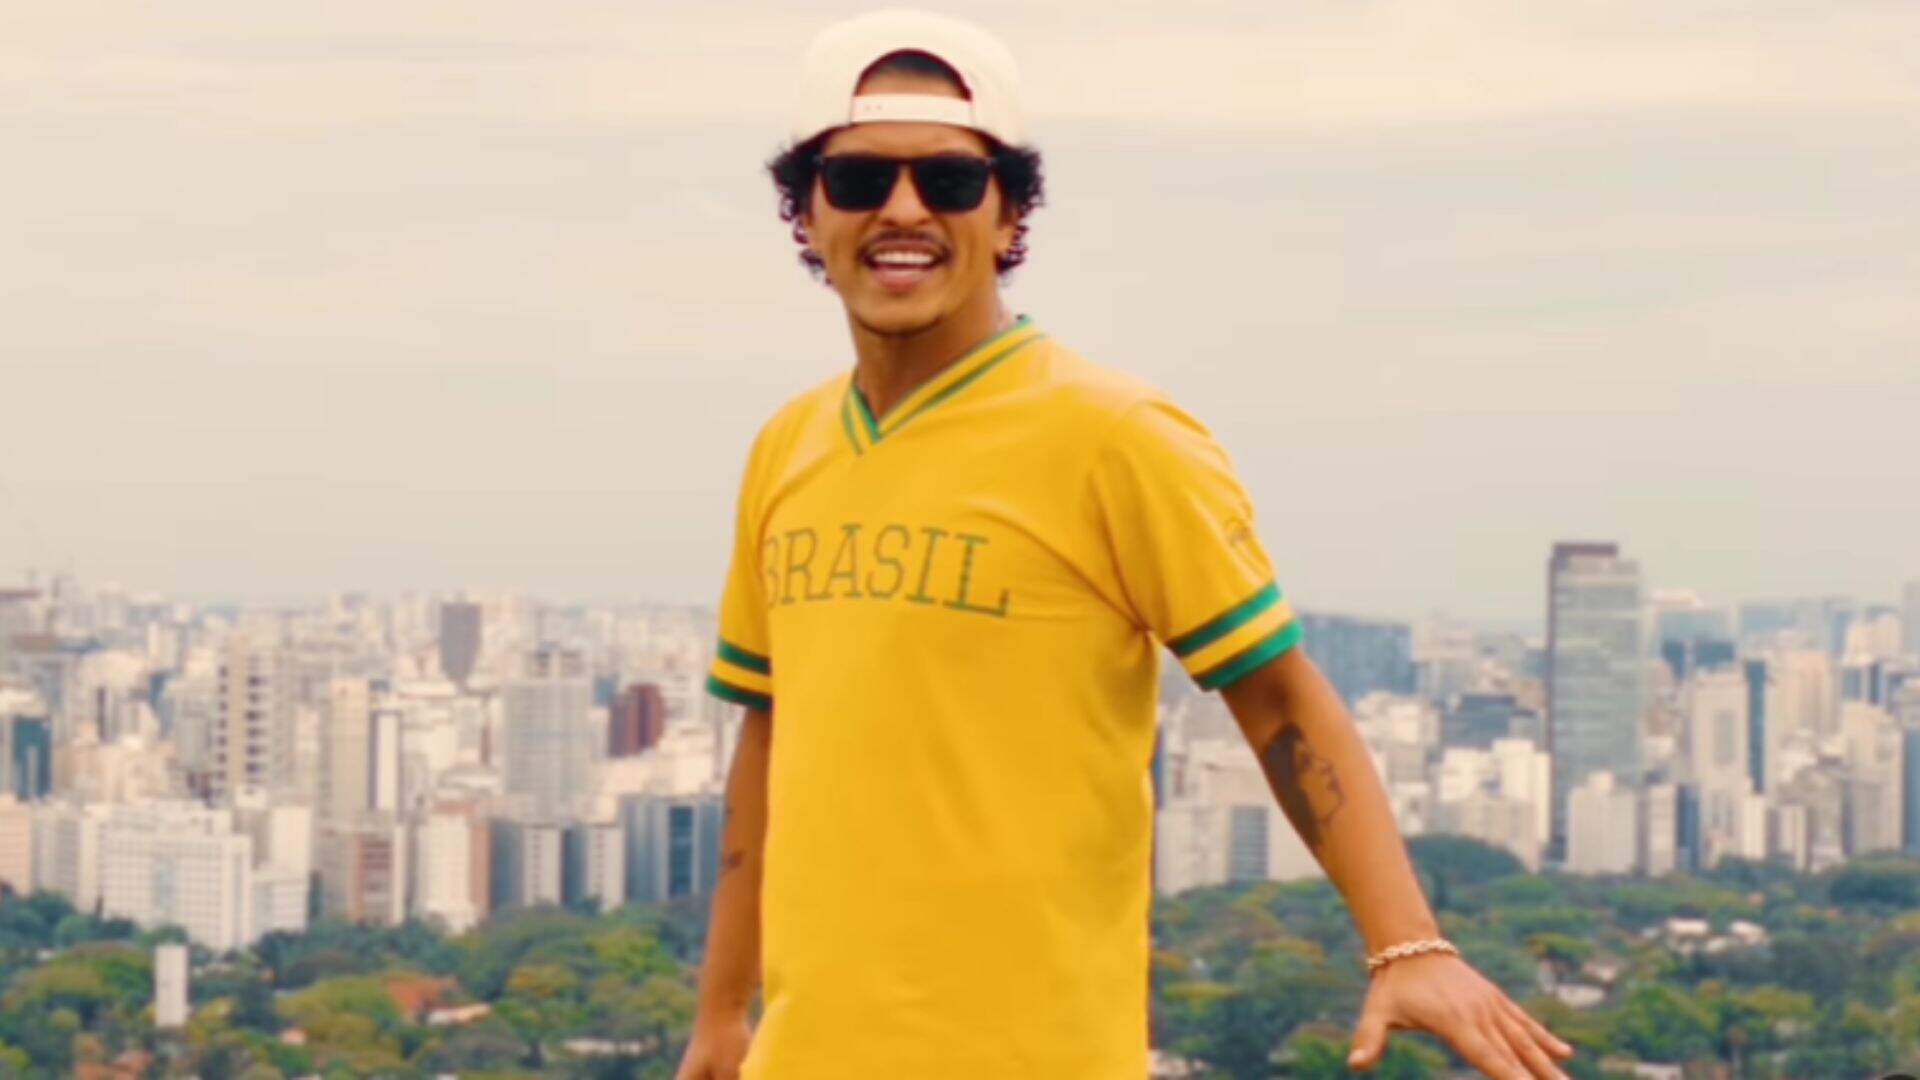 Vem aí! Bruno Mars anuncia volta ao Brasil ainda este ano